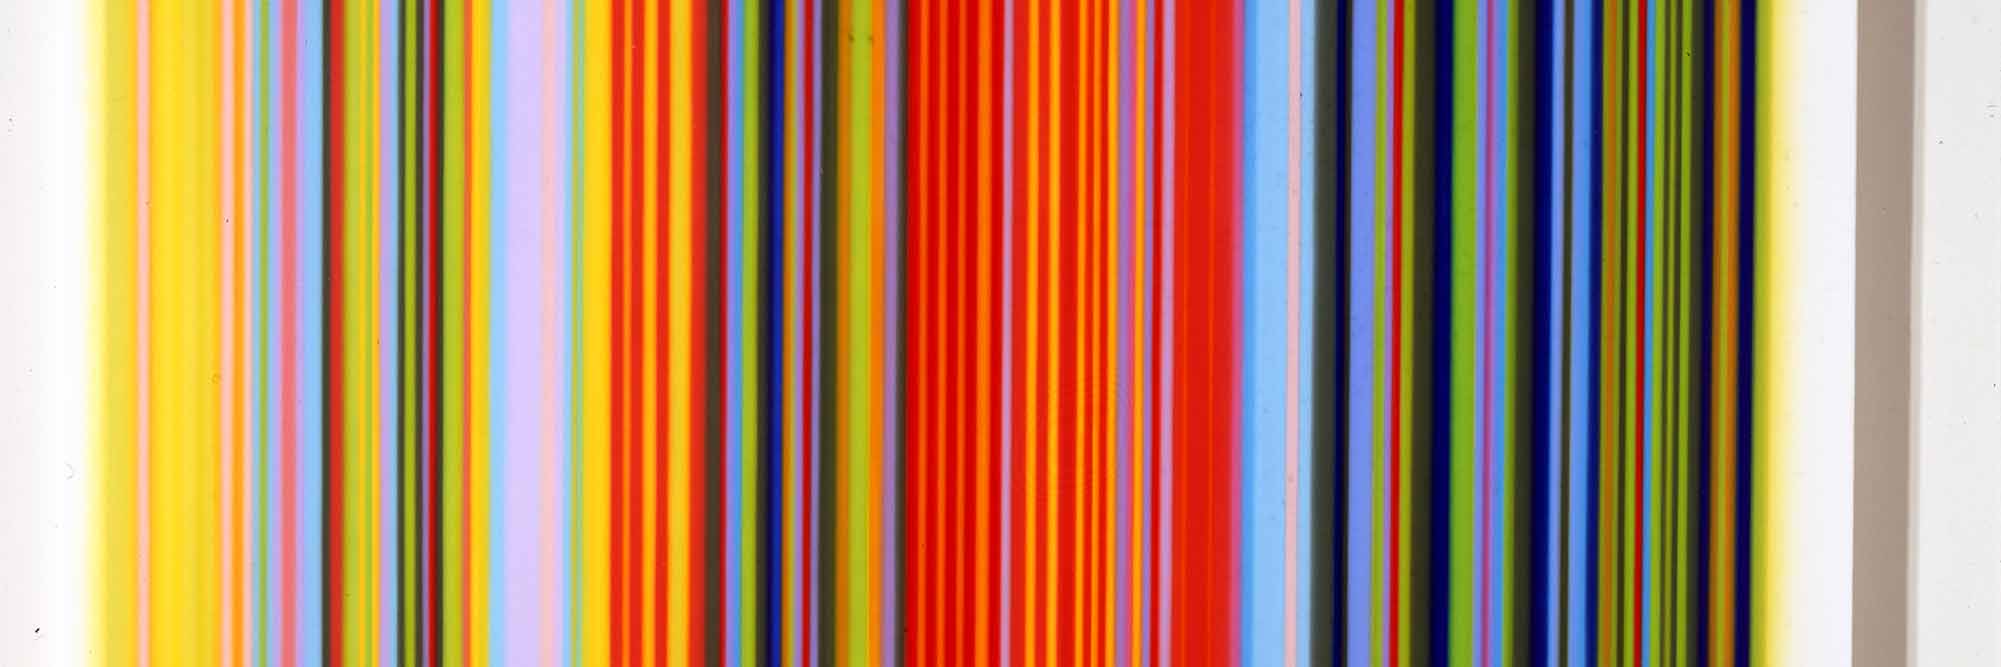 Spectrum of colors - acrylic on canvas by artist Tim Blavington